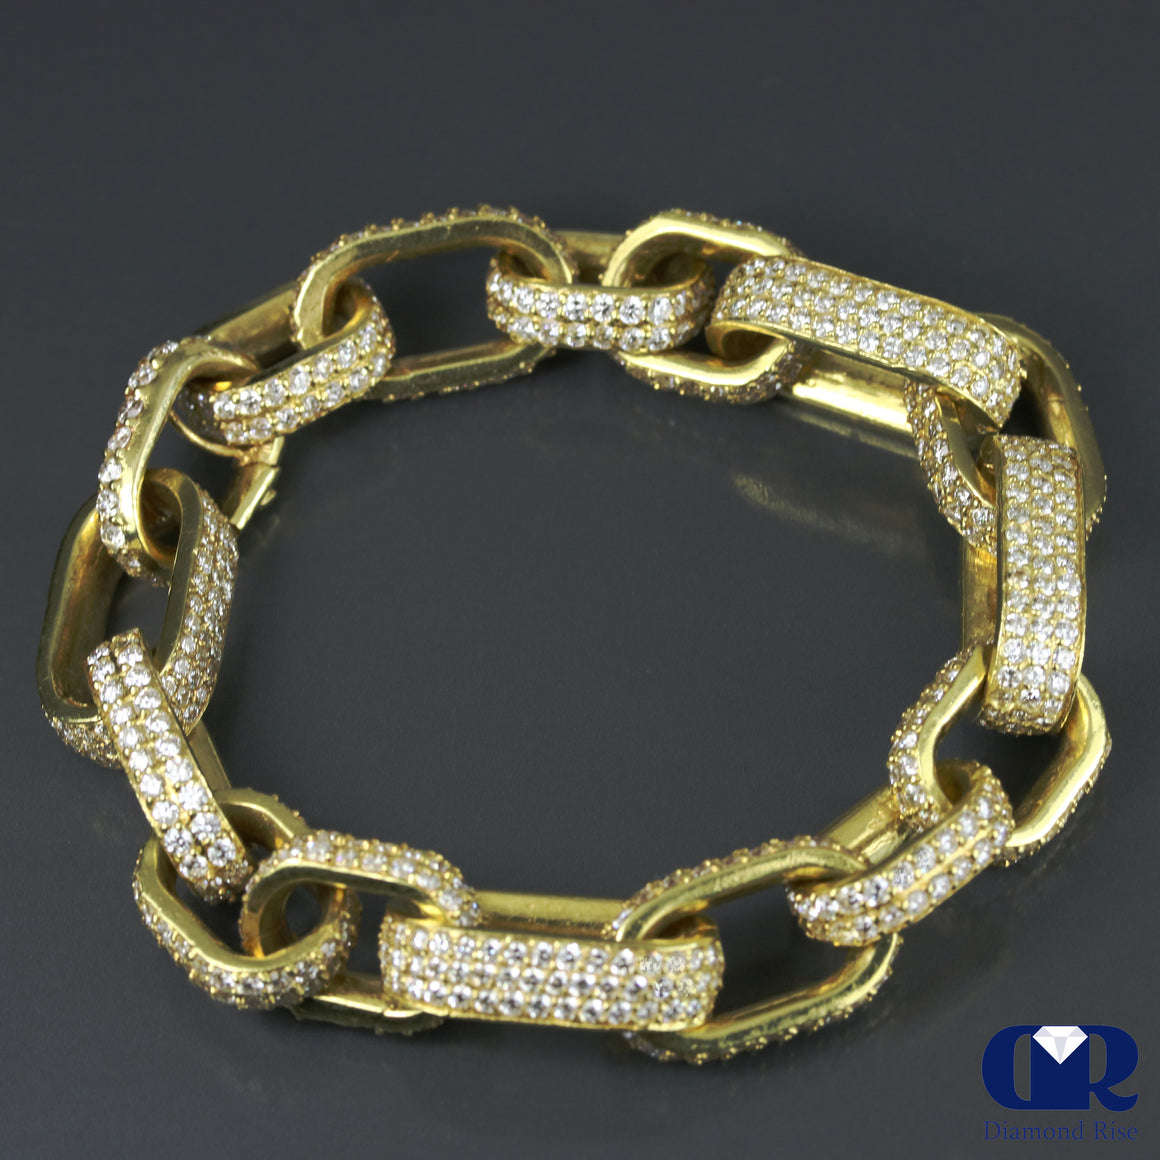 Women's 12.52 Ct. Round Cut Diamond Cube Link Bracelet In 18K Solid Heavy Yellow Gold - Diamond Rise Jewelry